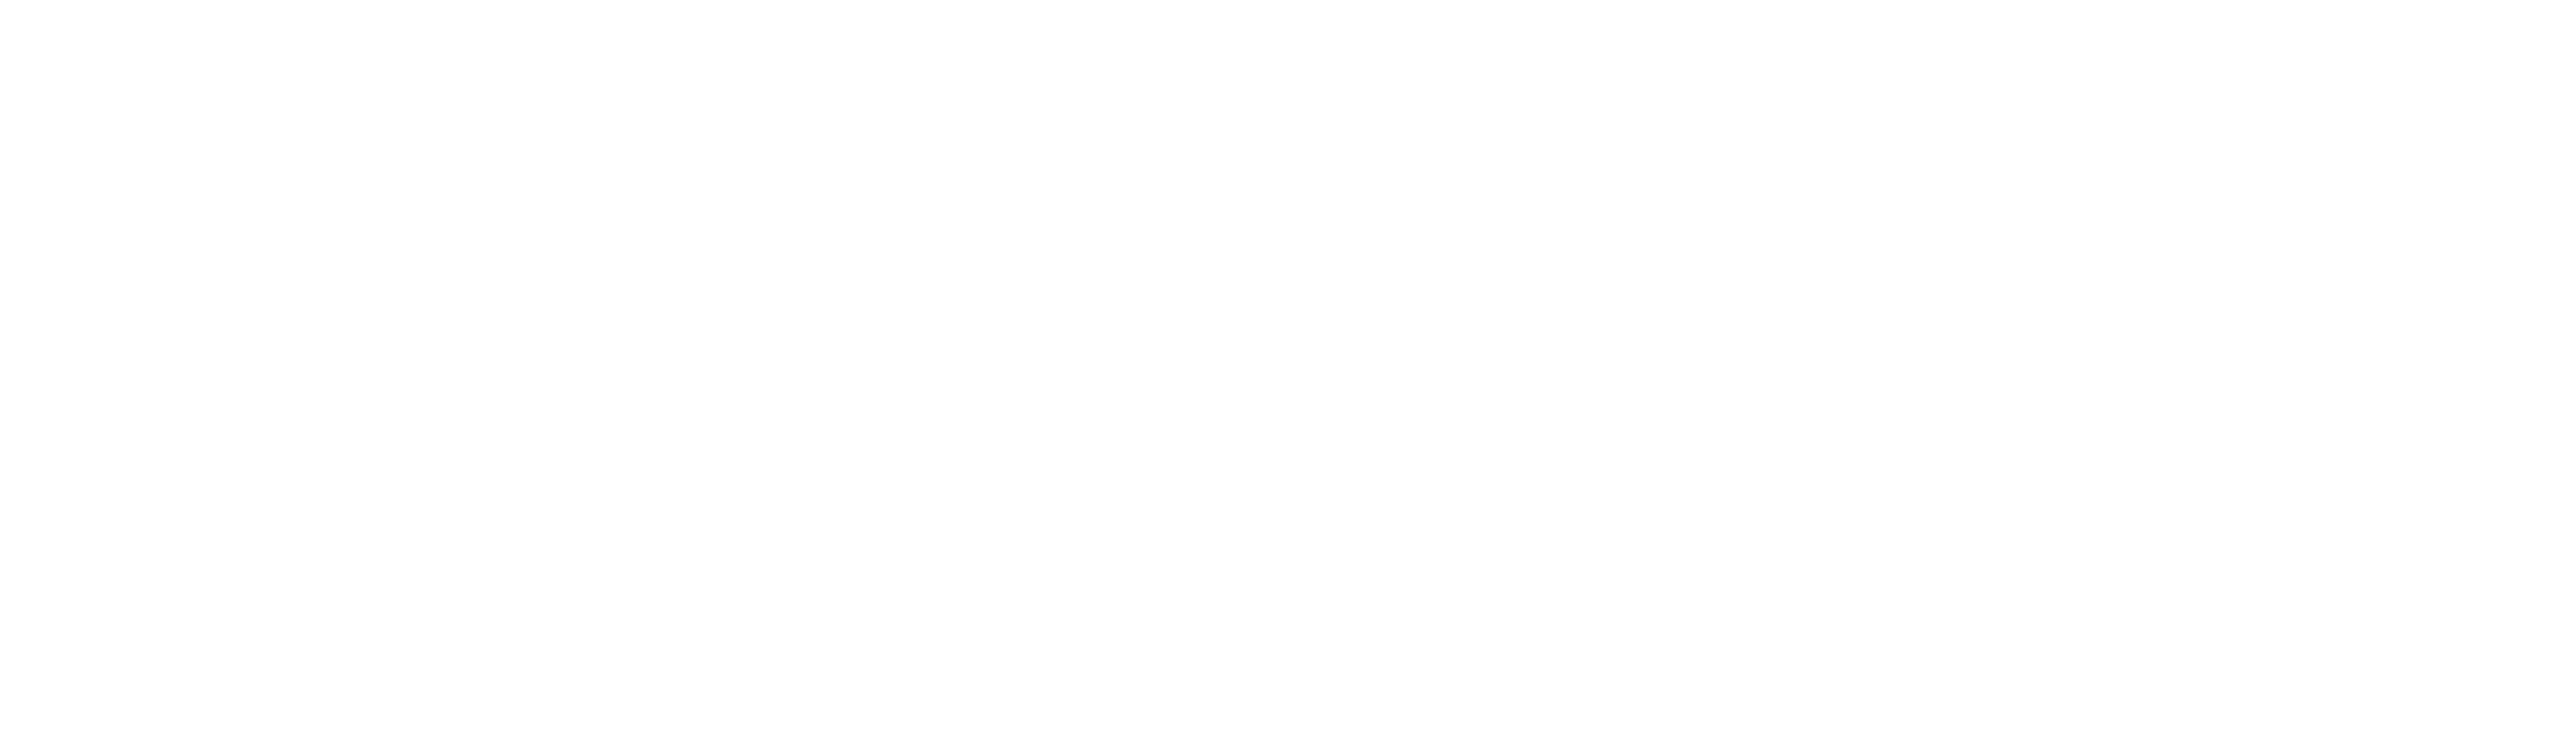 3 Ninjas Knuckle Up logo